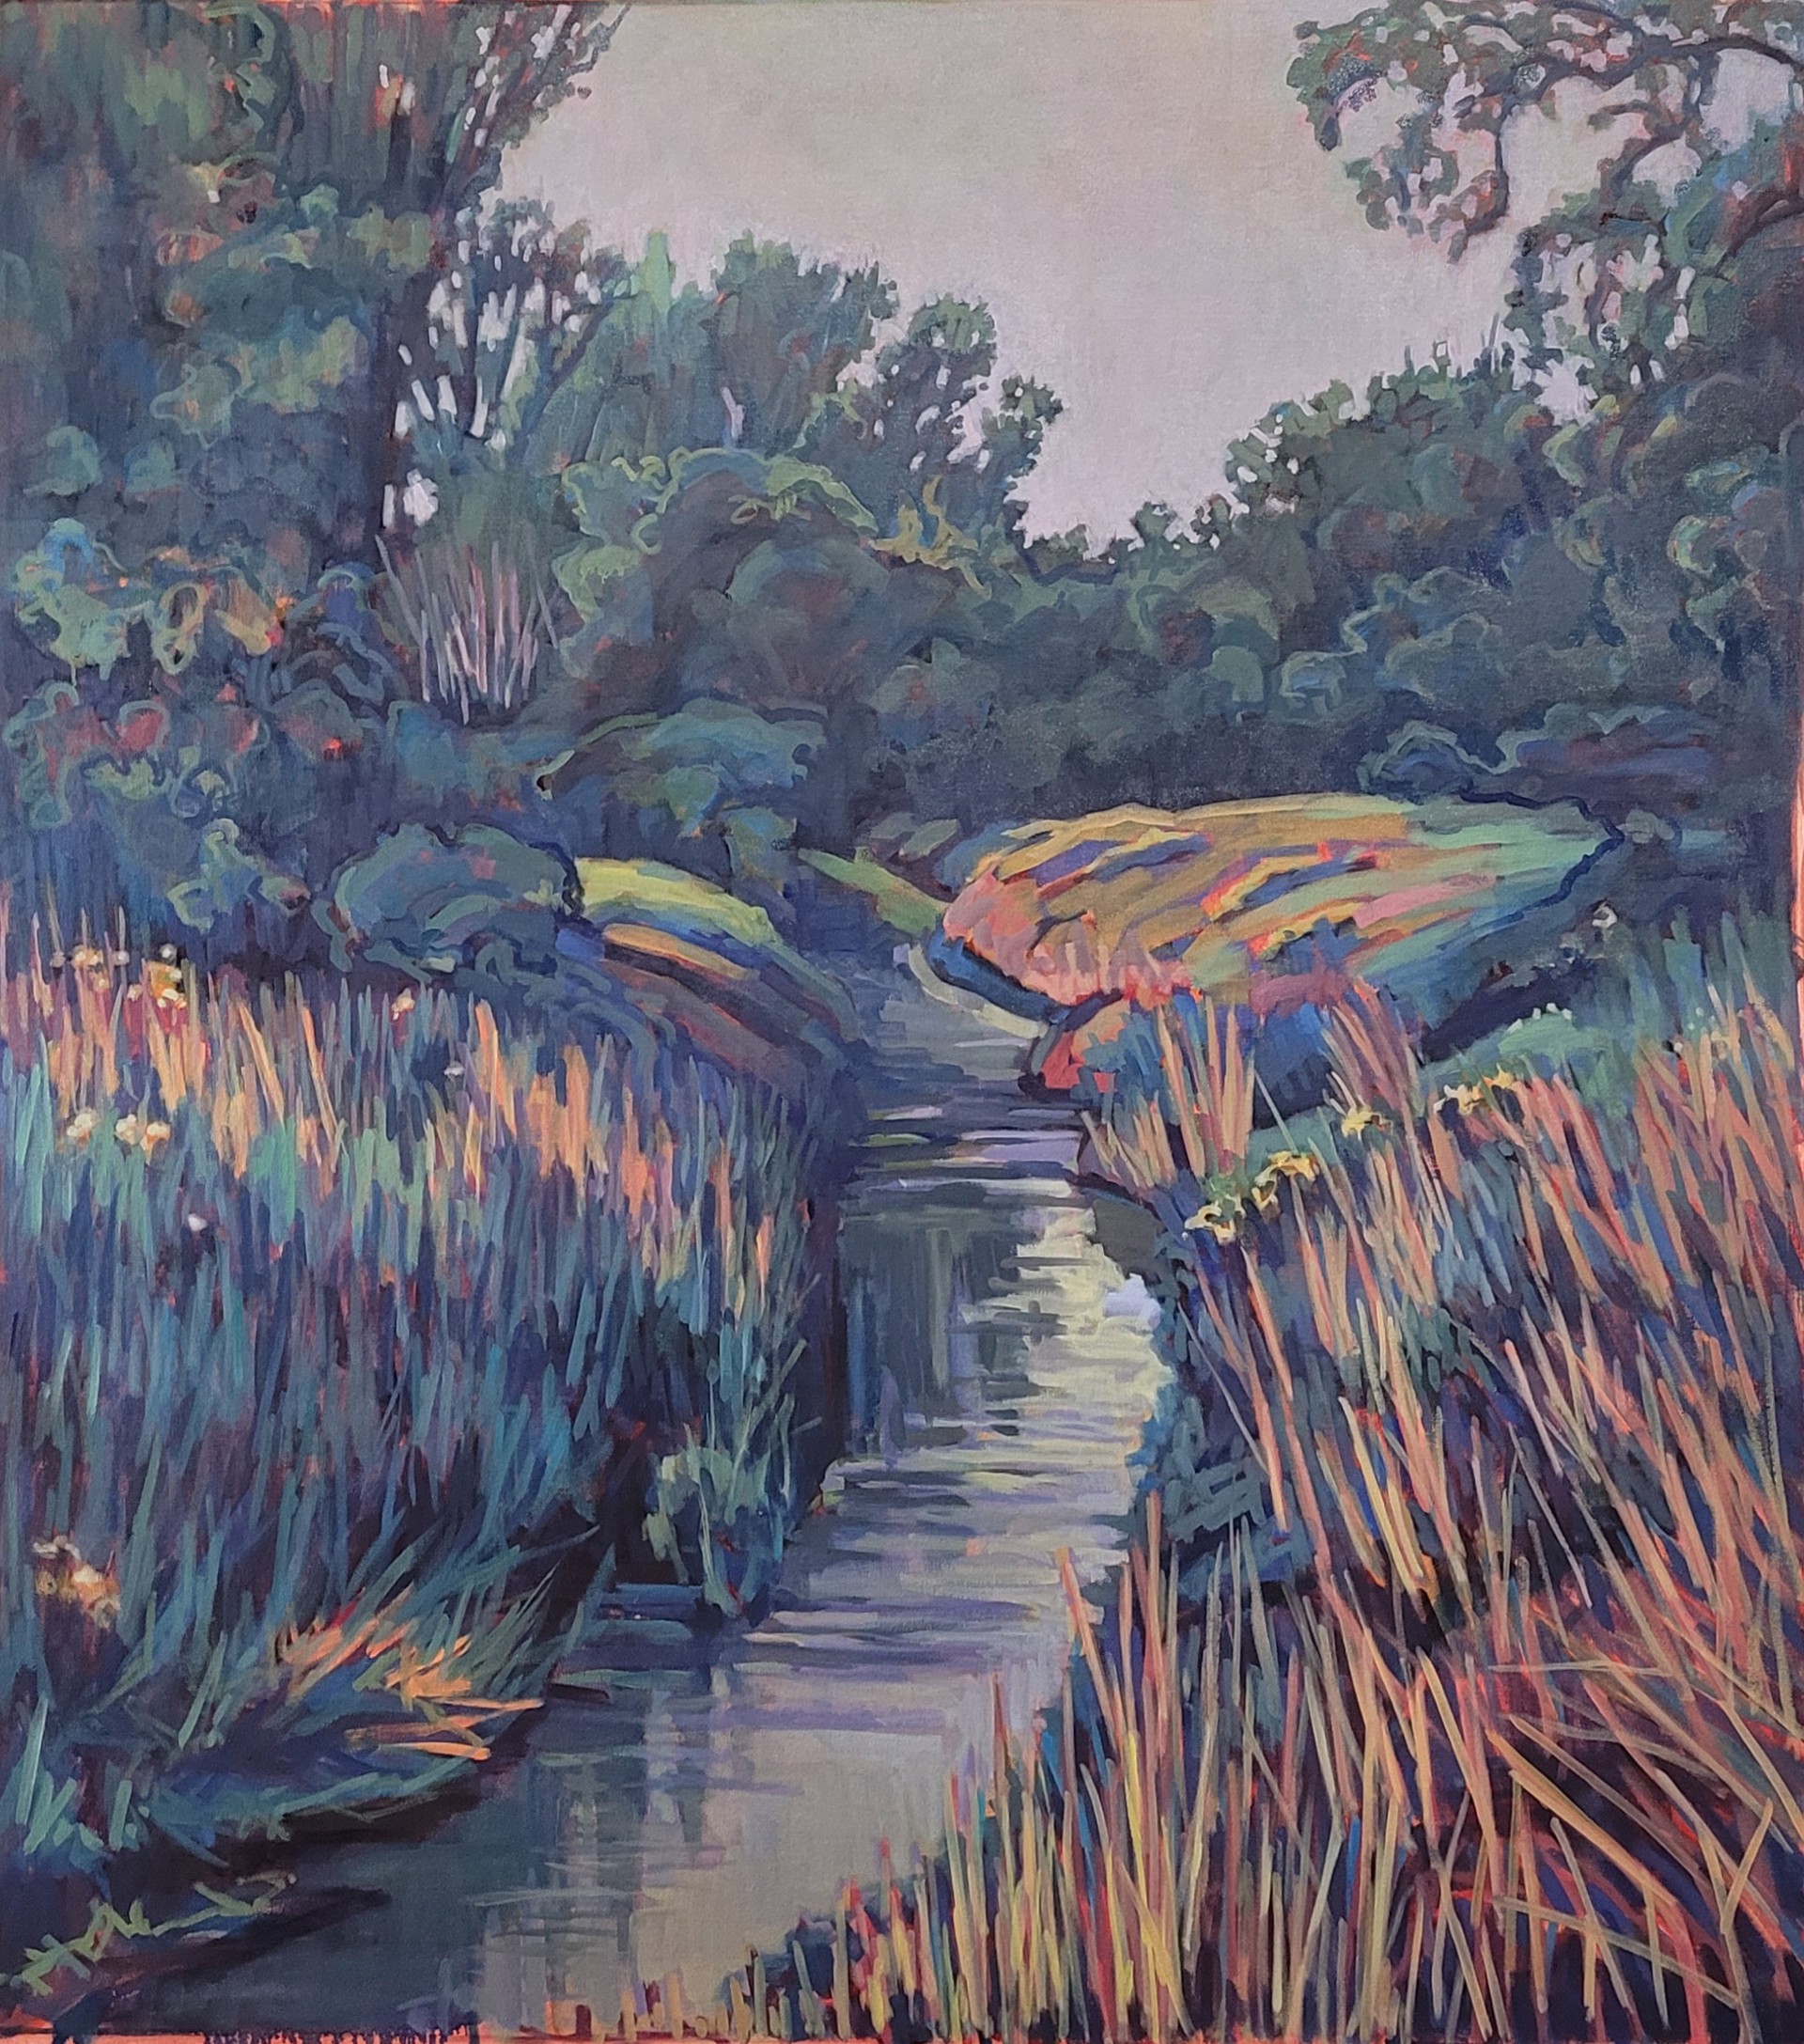 Waterway Prairie by Nina Weiss